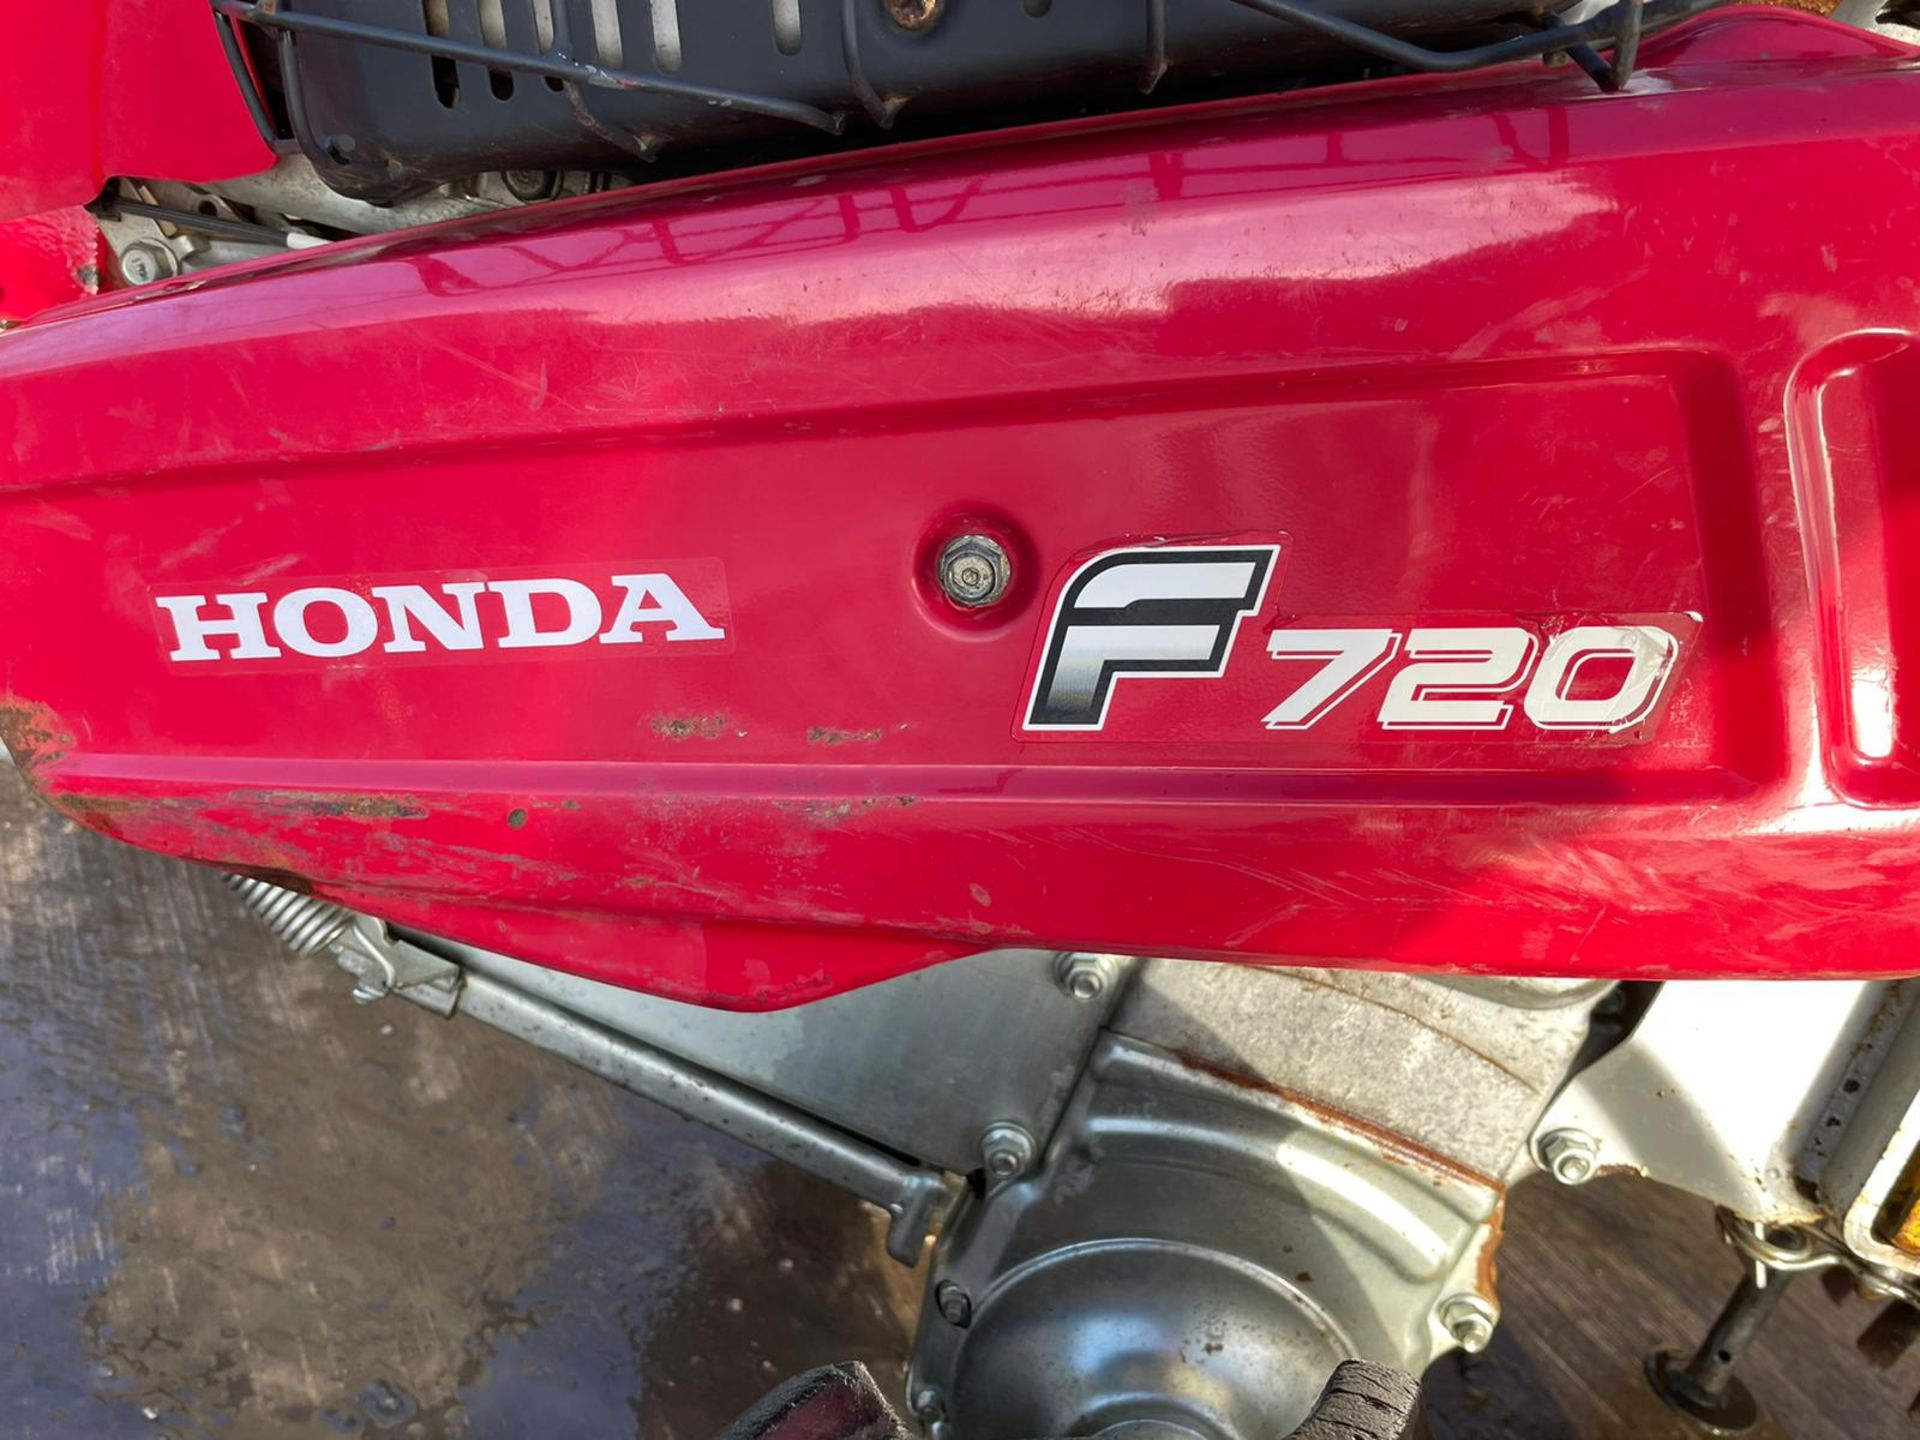 2015 Honda F720 Walk Behind Multi Tool With Blec Stone Raker And Blec Harrow *PLUS VAT* - Image 12 of 15